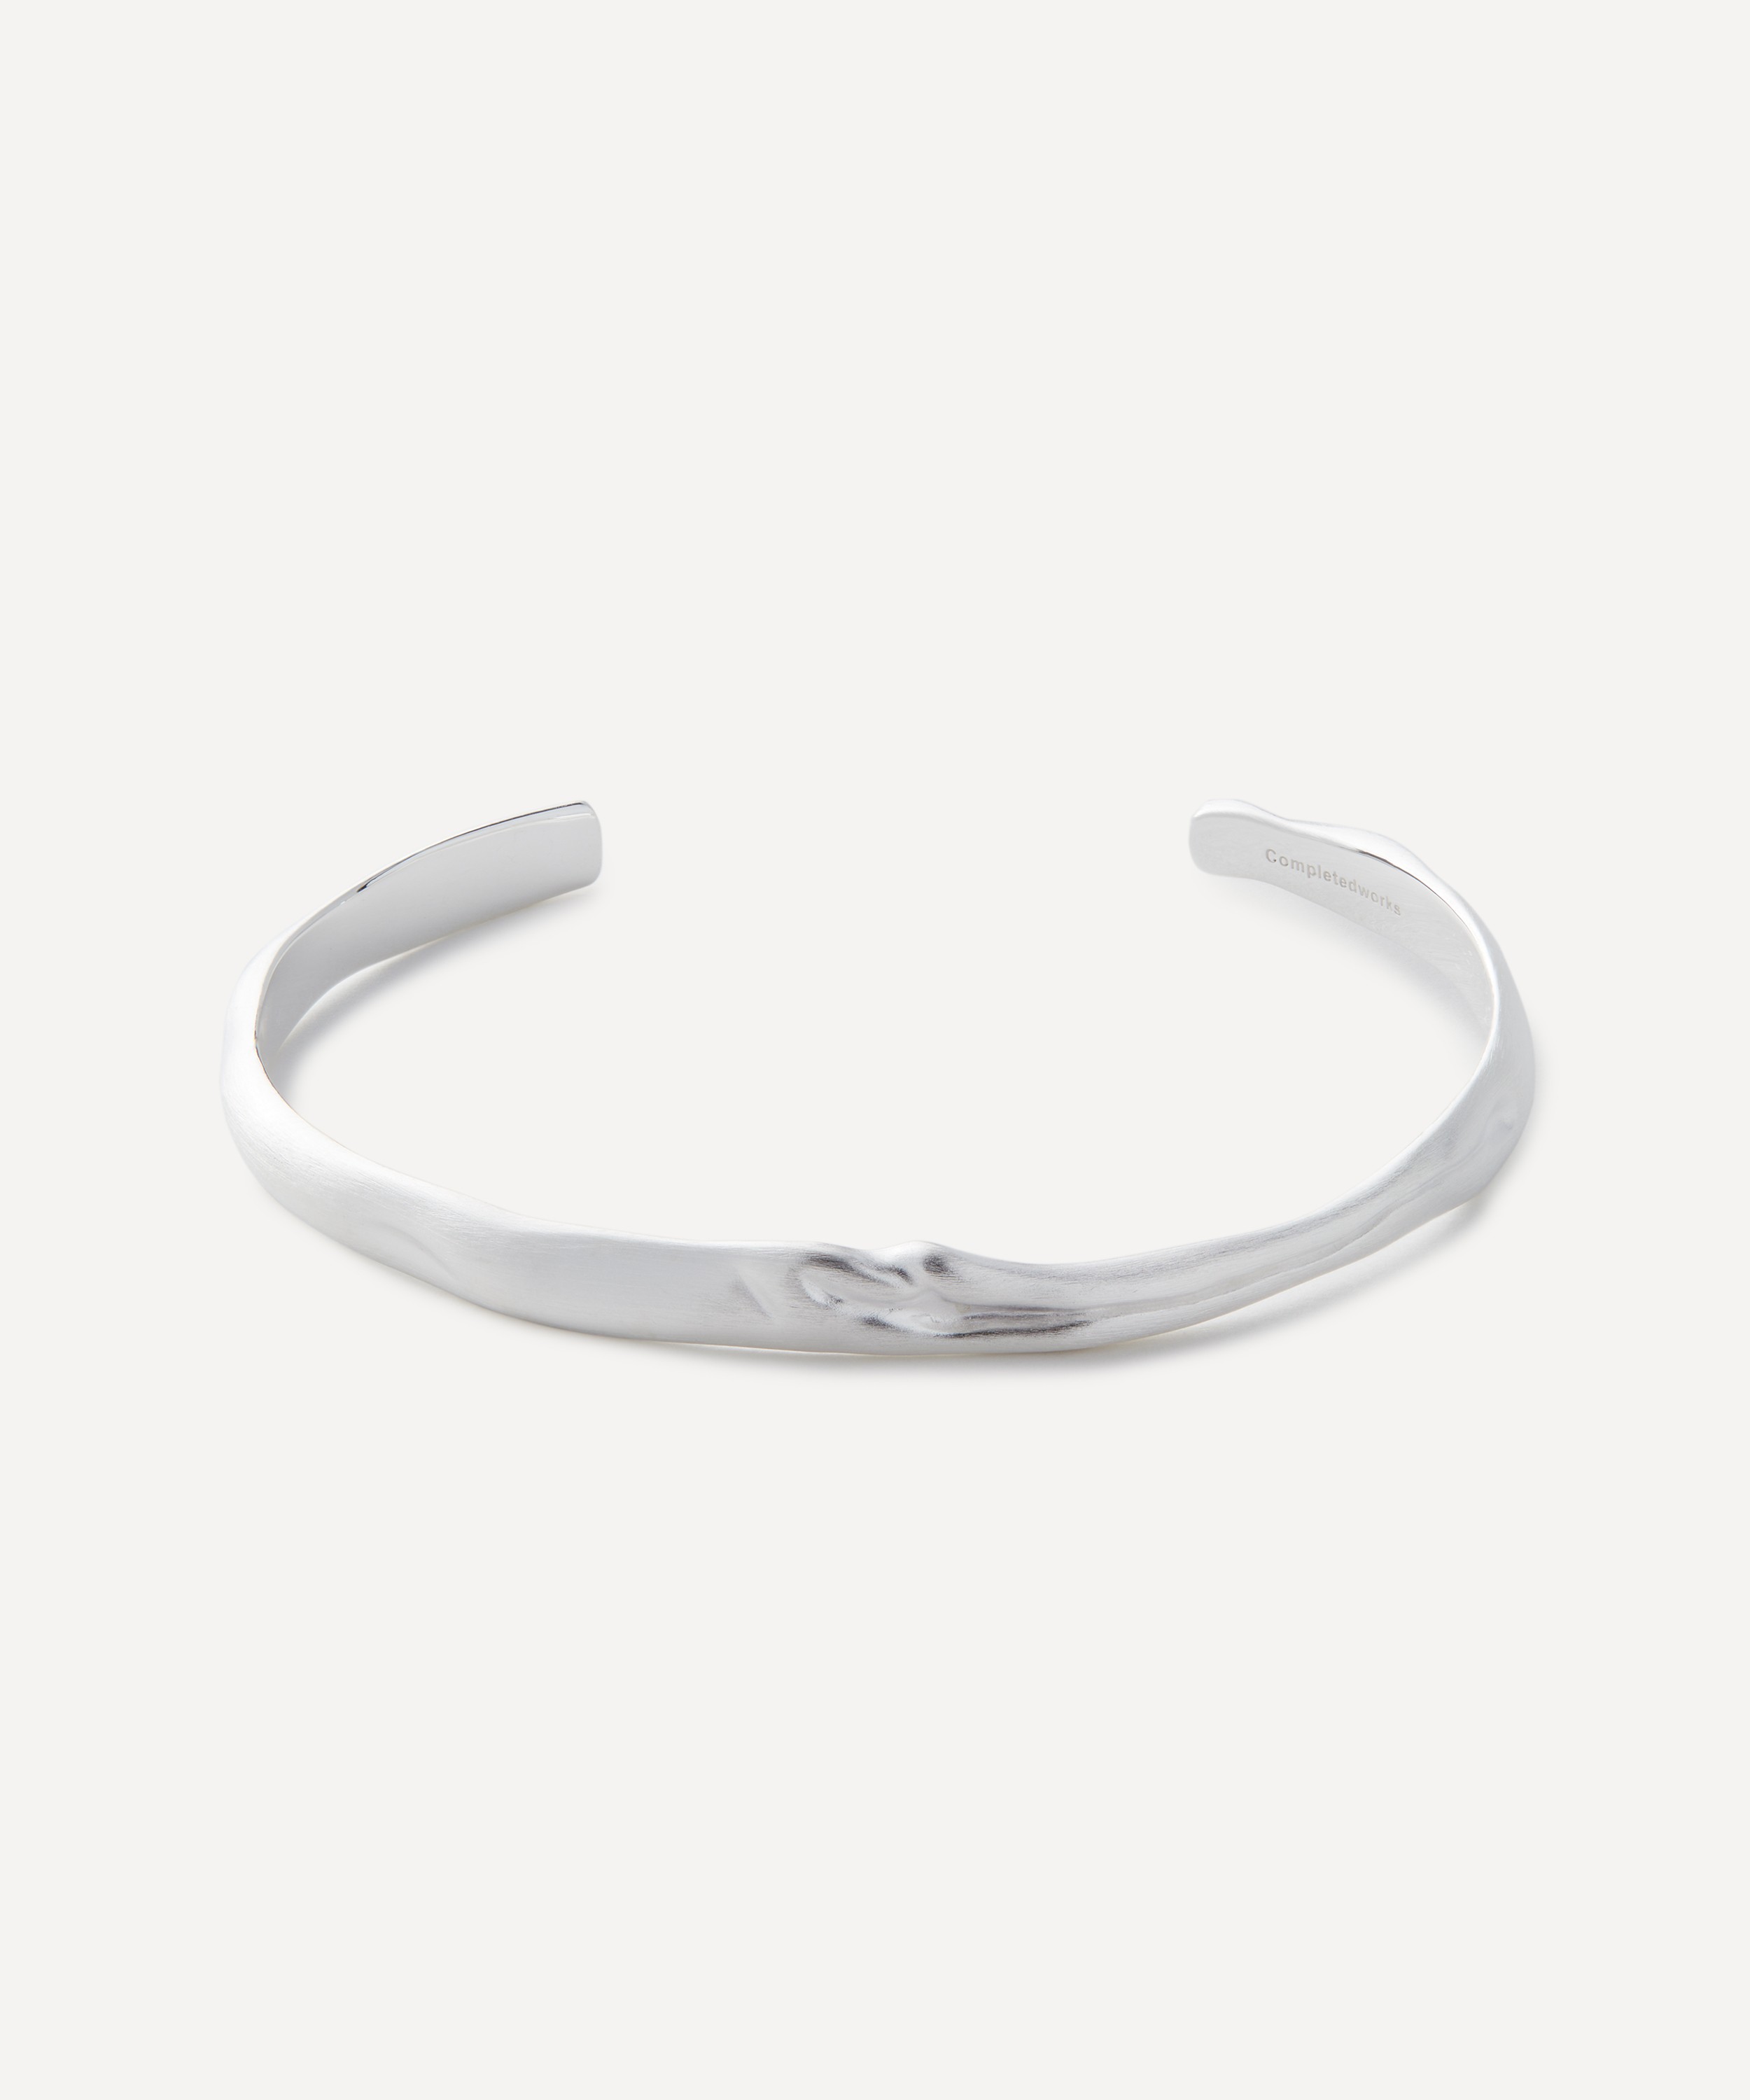 Completedworks - Platinum-Plated Sterling Silver Deflated Cuff Bracelet